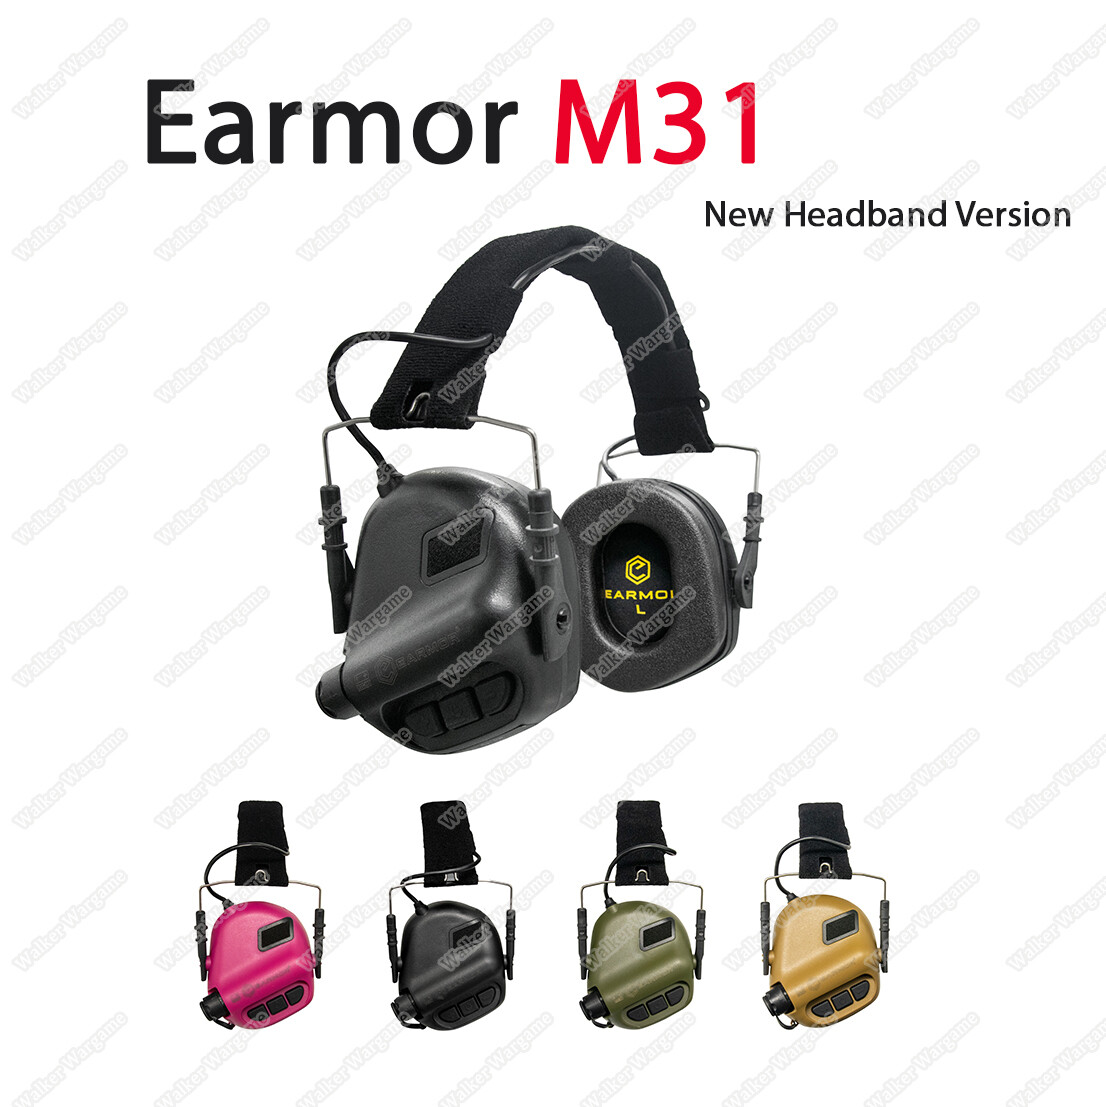 EARMOR M31 Electronic Hearing Protector